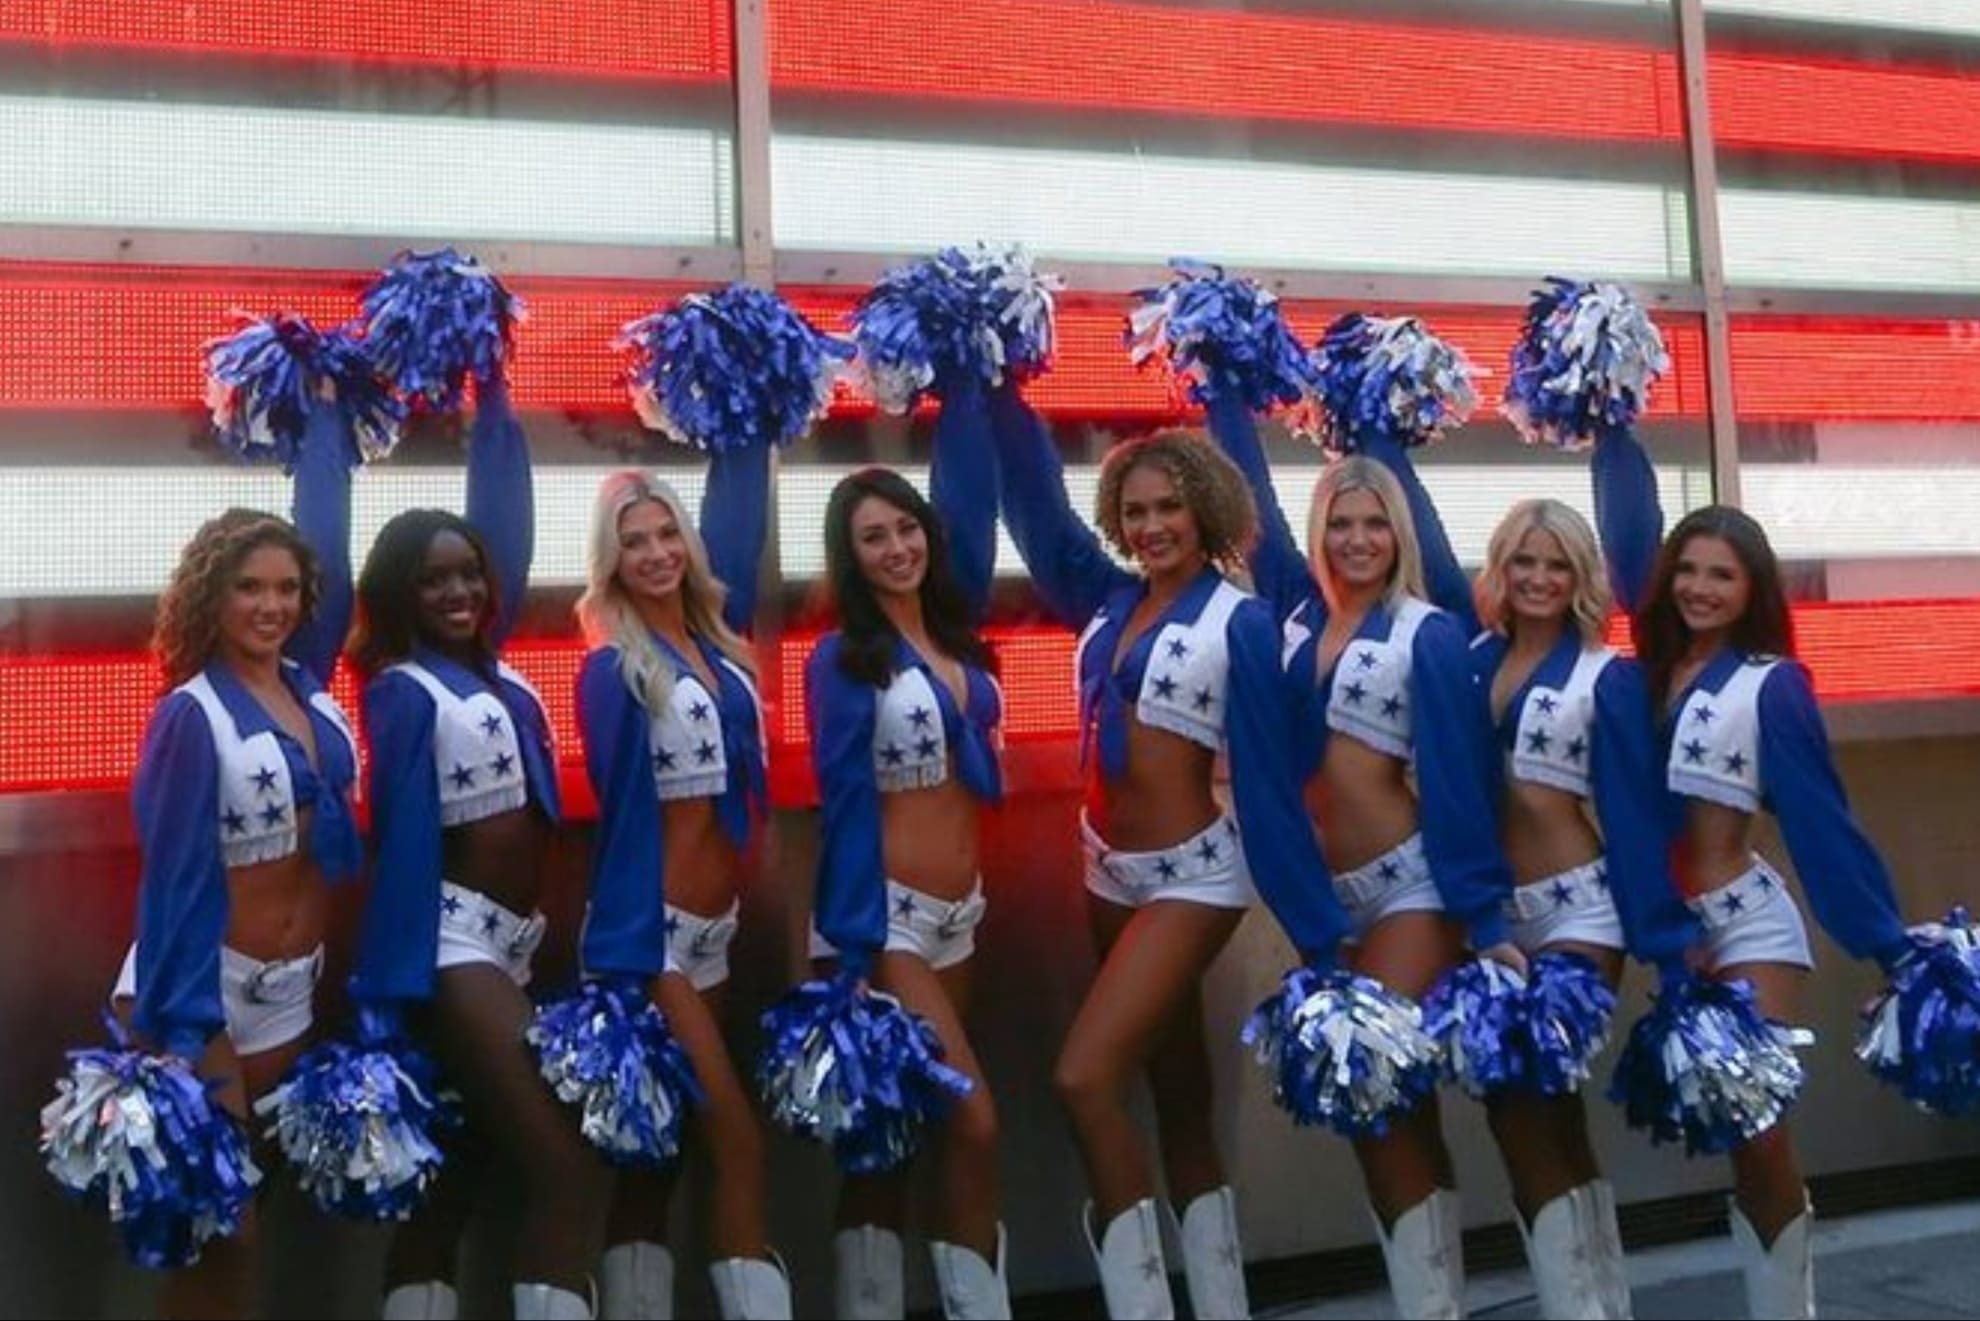 The world famous Dallas Cowboys Cheerleaders.